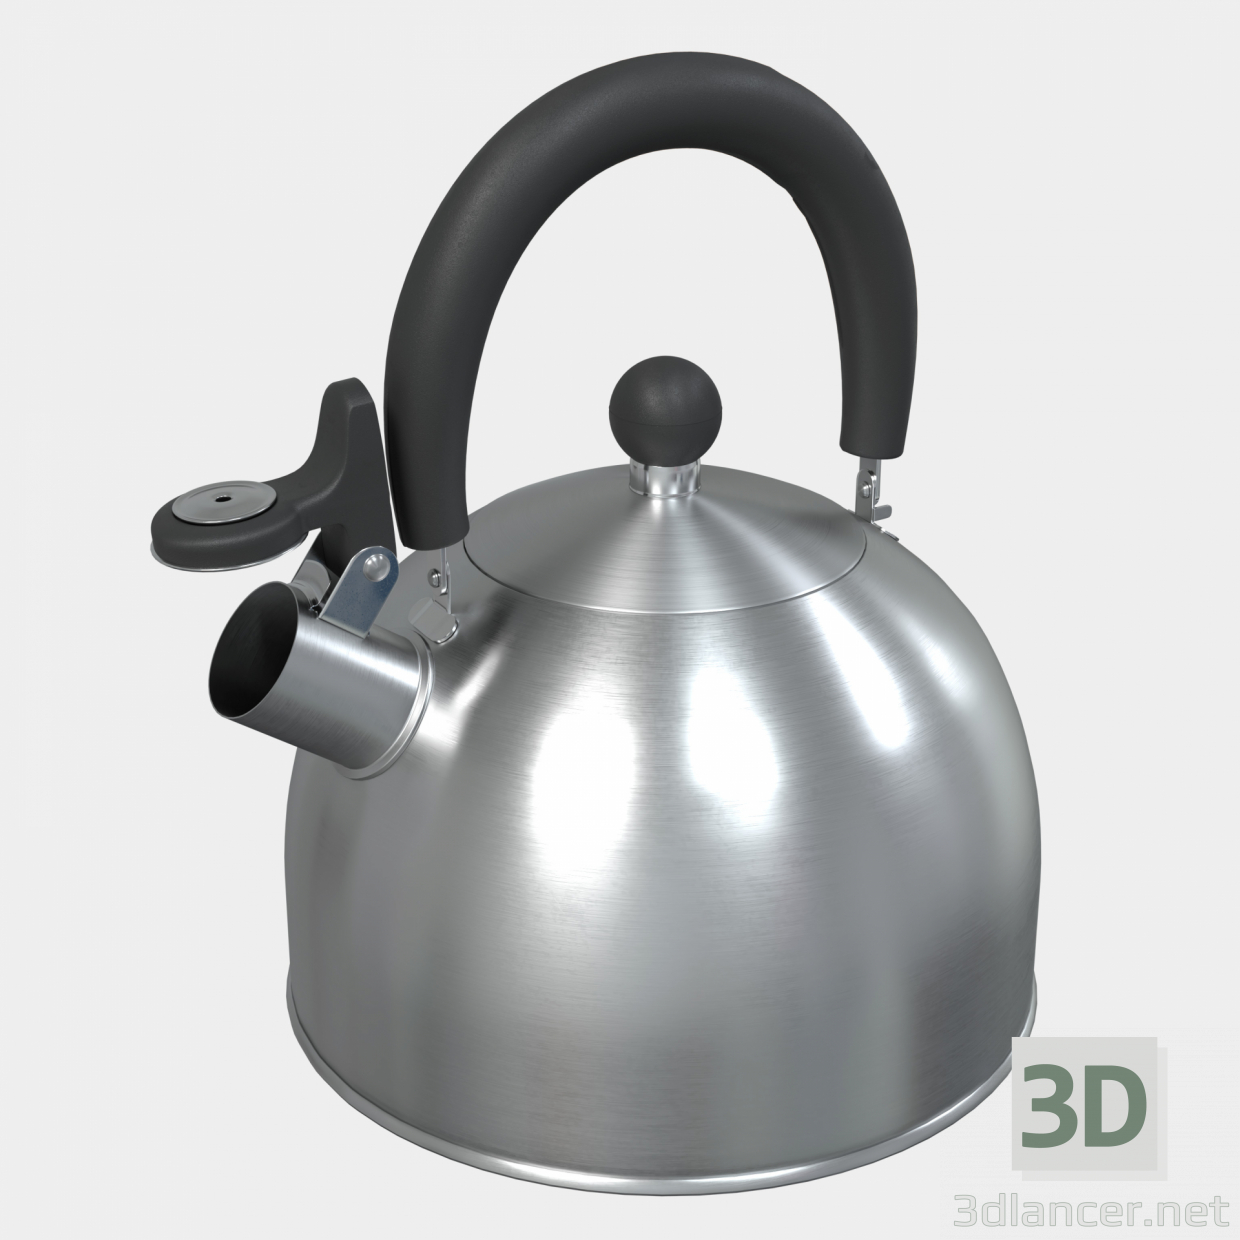 Pfeifenkessel 3D-Modell kaufen - Rendern